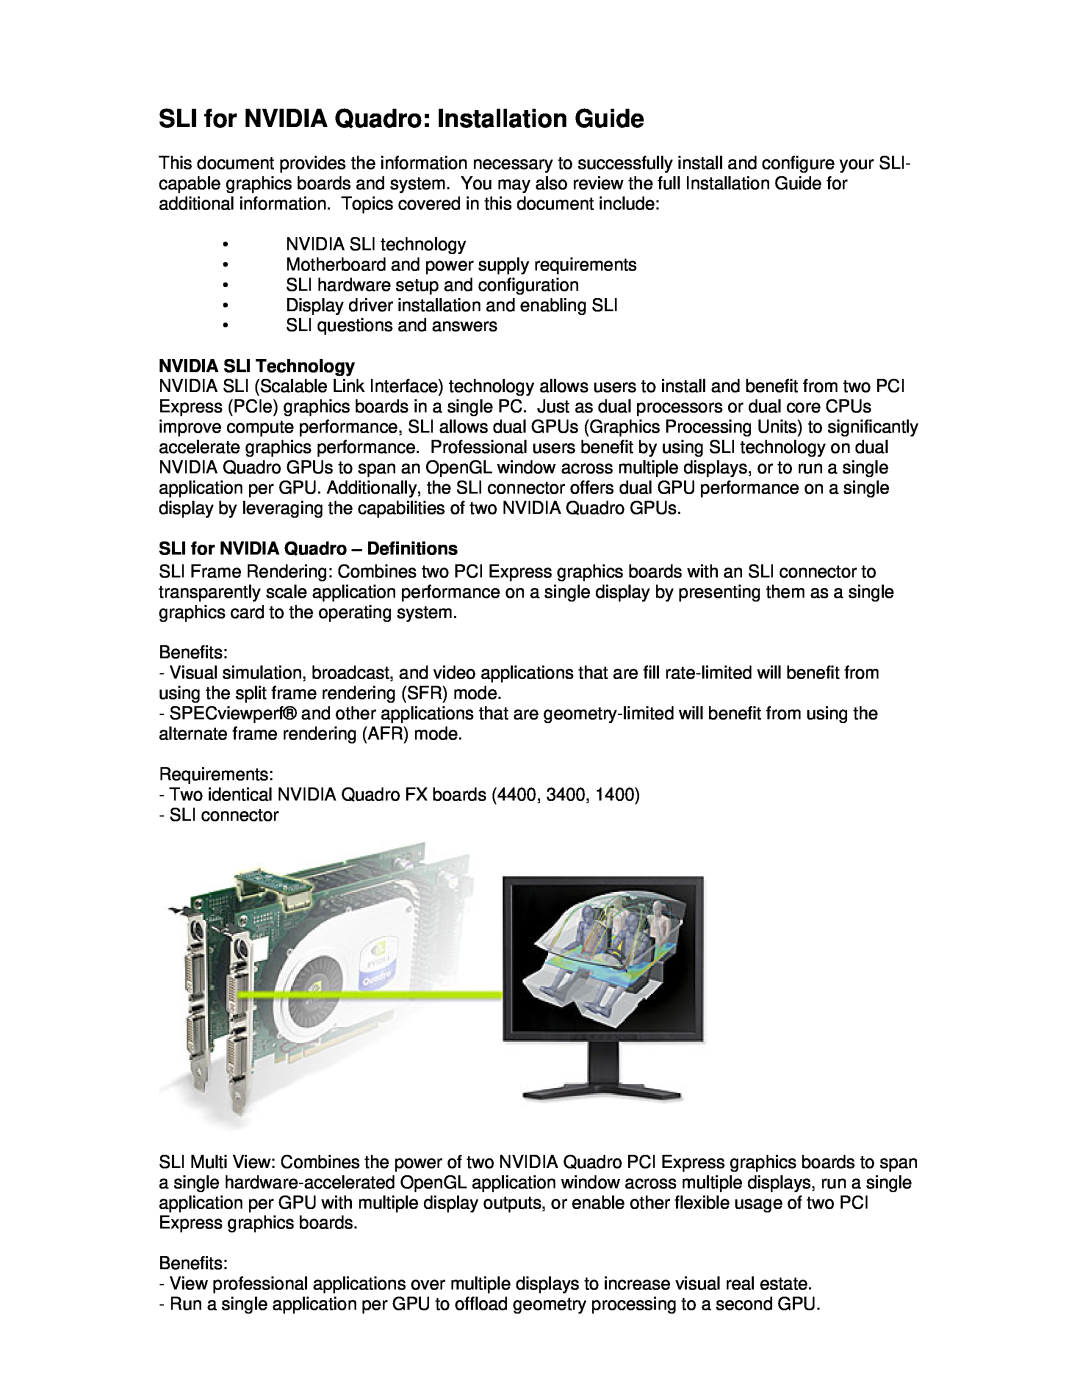 Nvidia manual NVIDIA SLI Technology, SLI for NVIDIA Quadro - Definitions, SLI for NVIDIA Quadro Installation Guide 